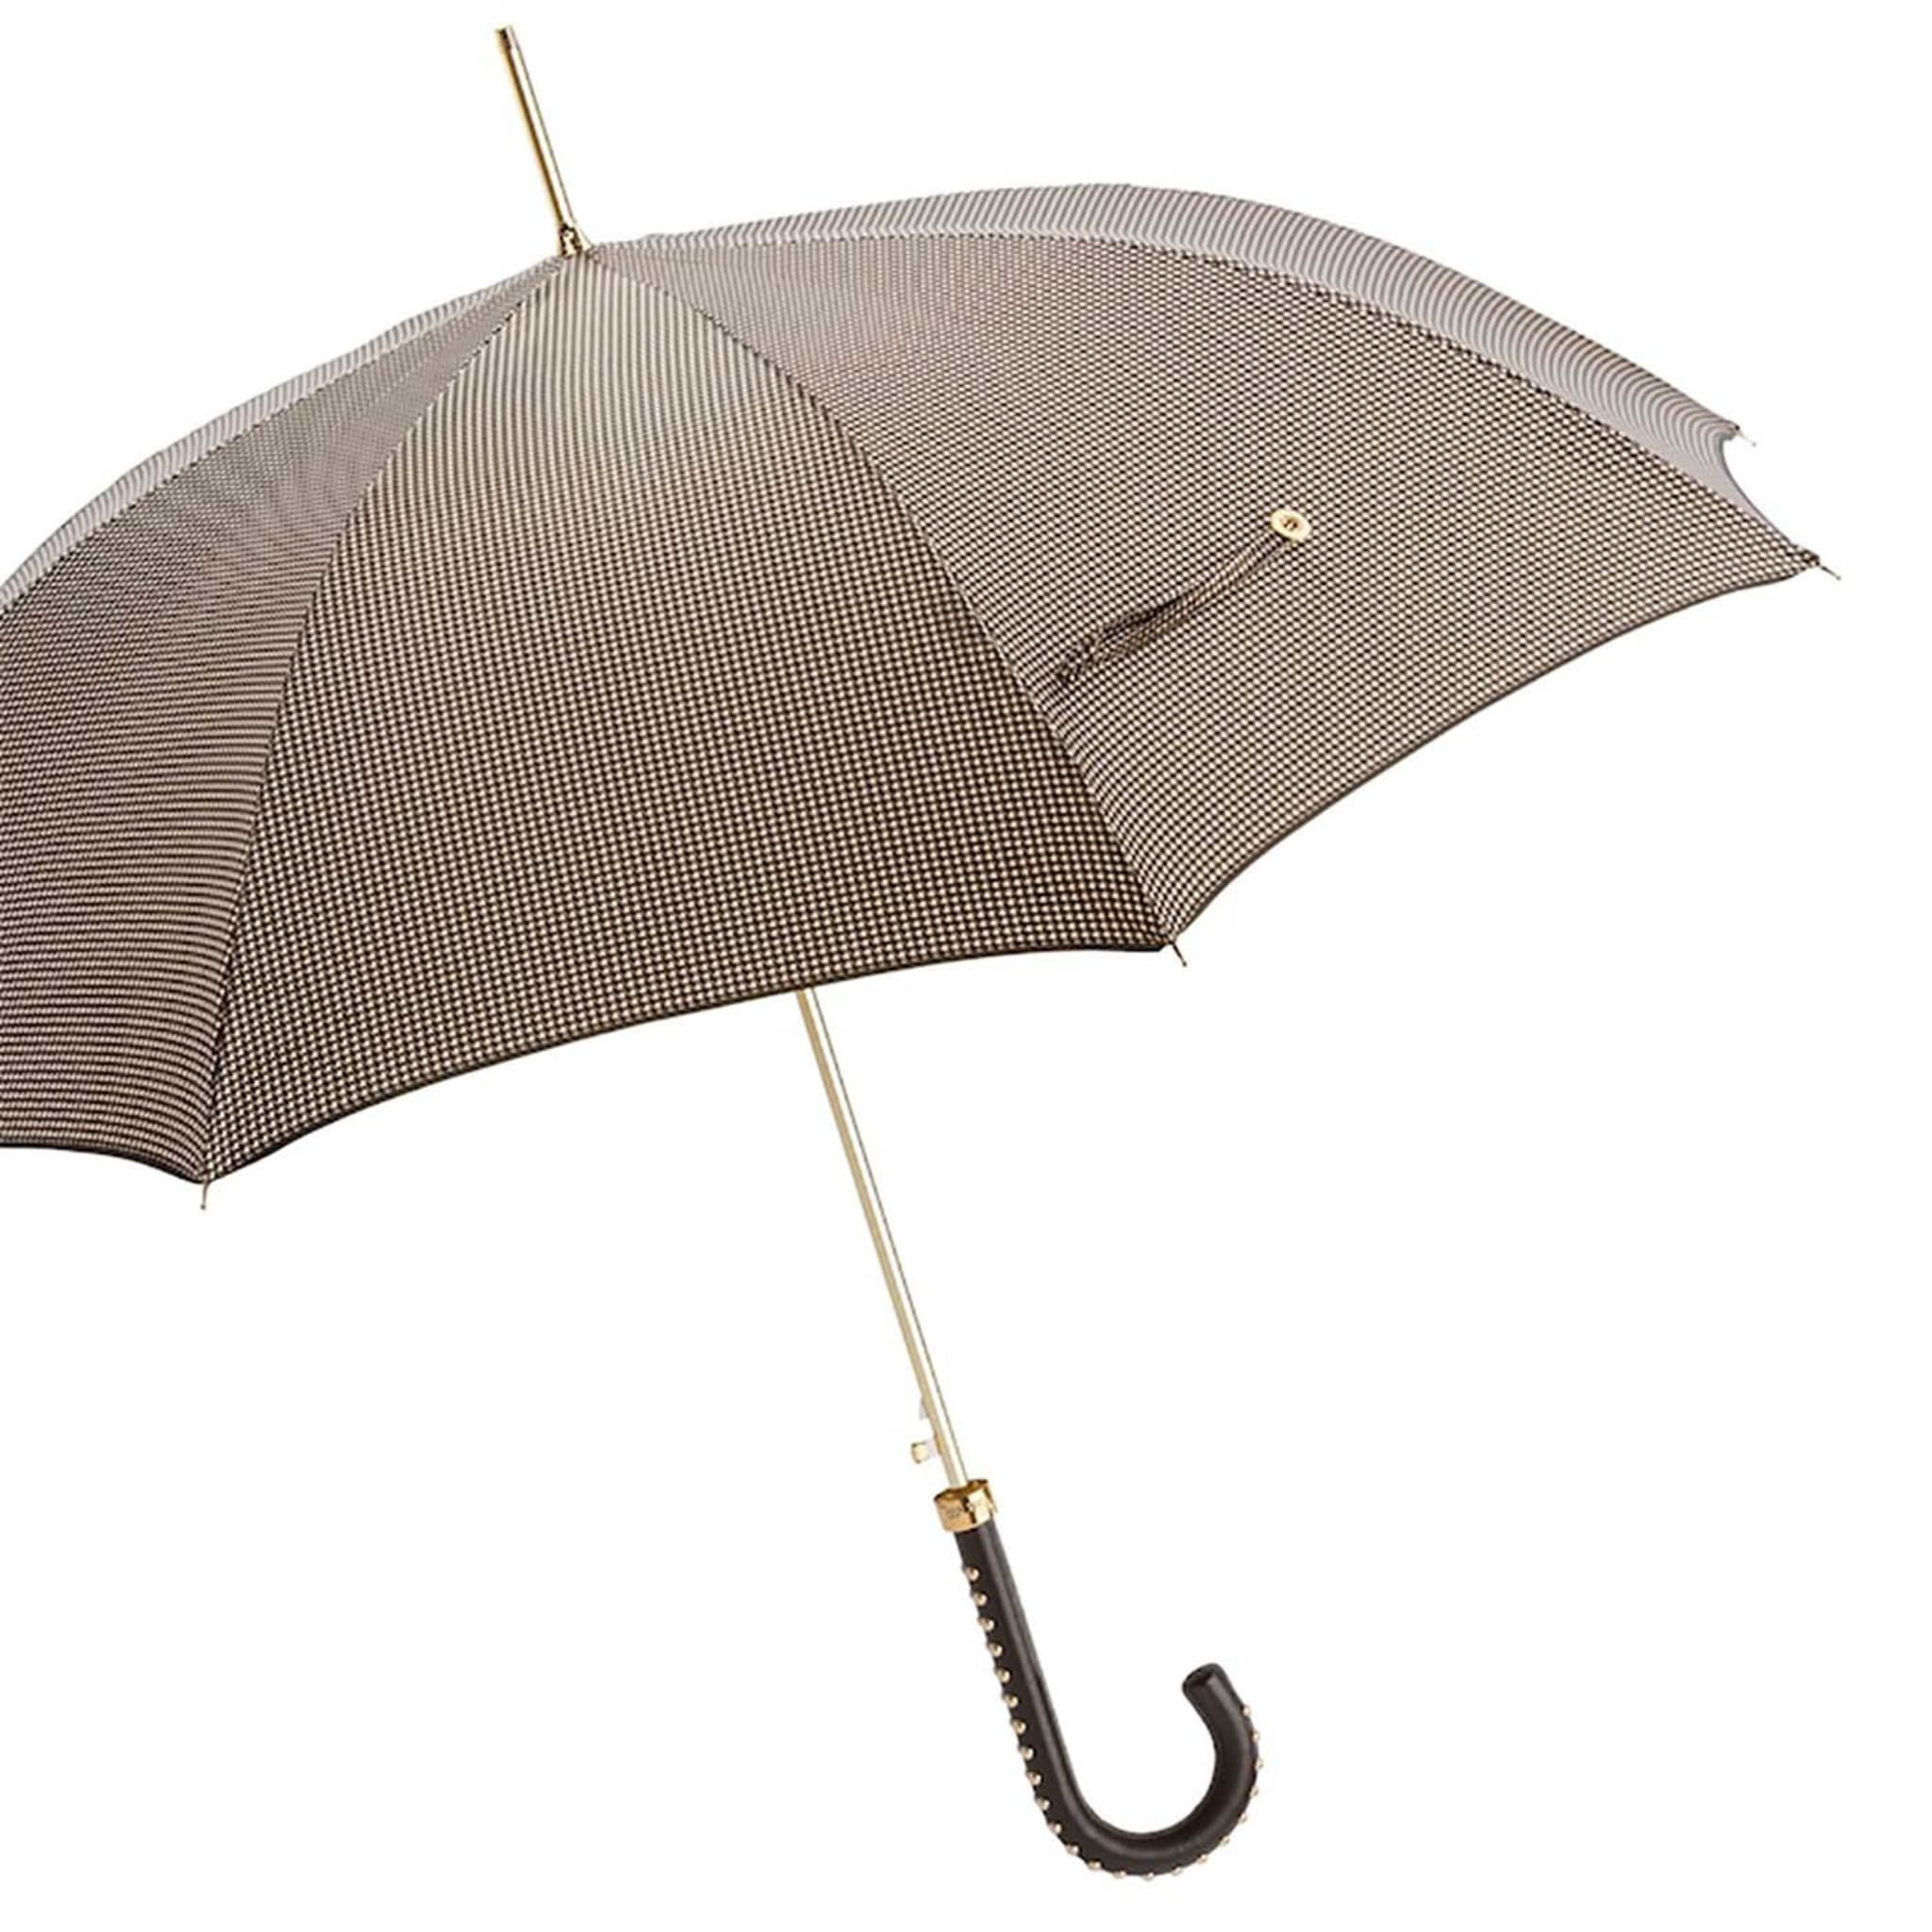 Pied de Poule Umbrella with Studded Leather Handle - Alternative view 4